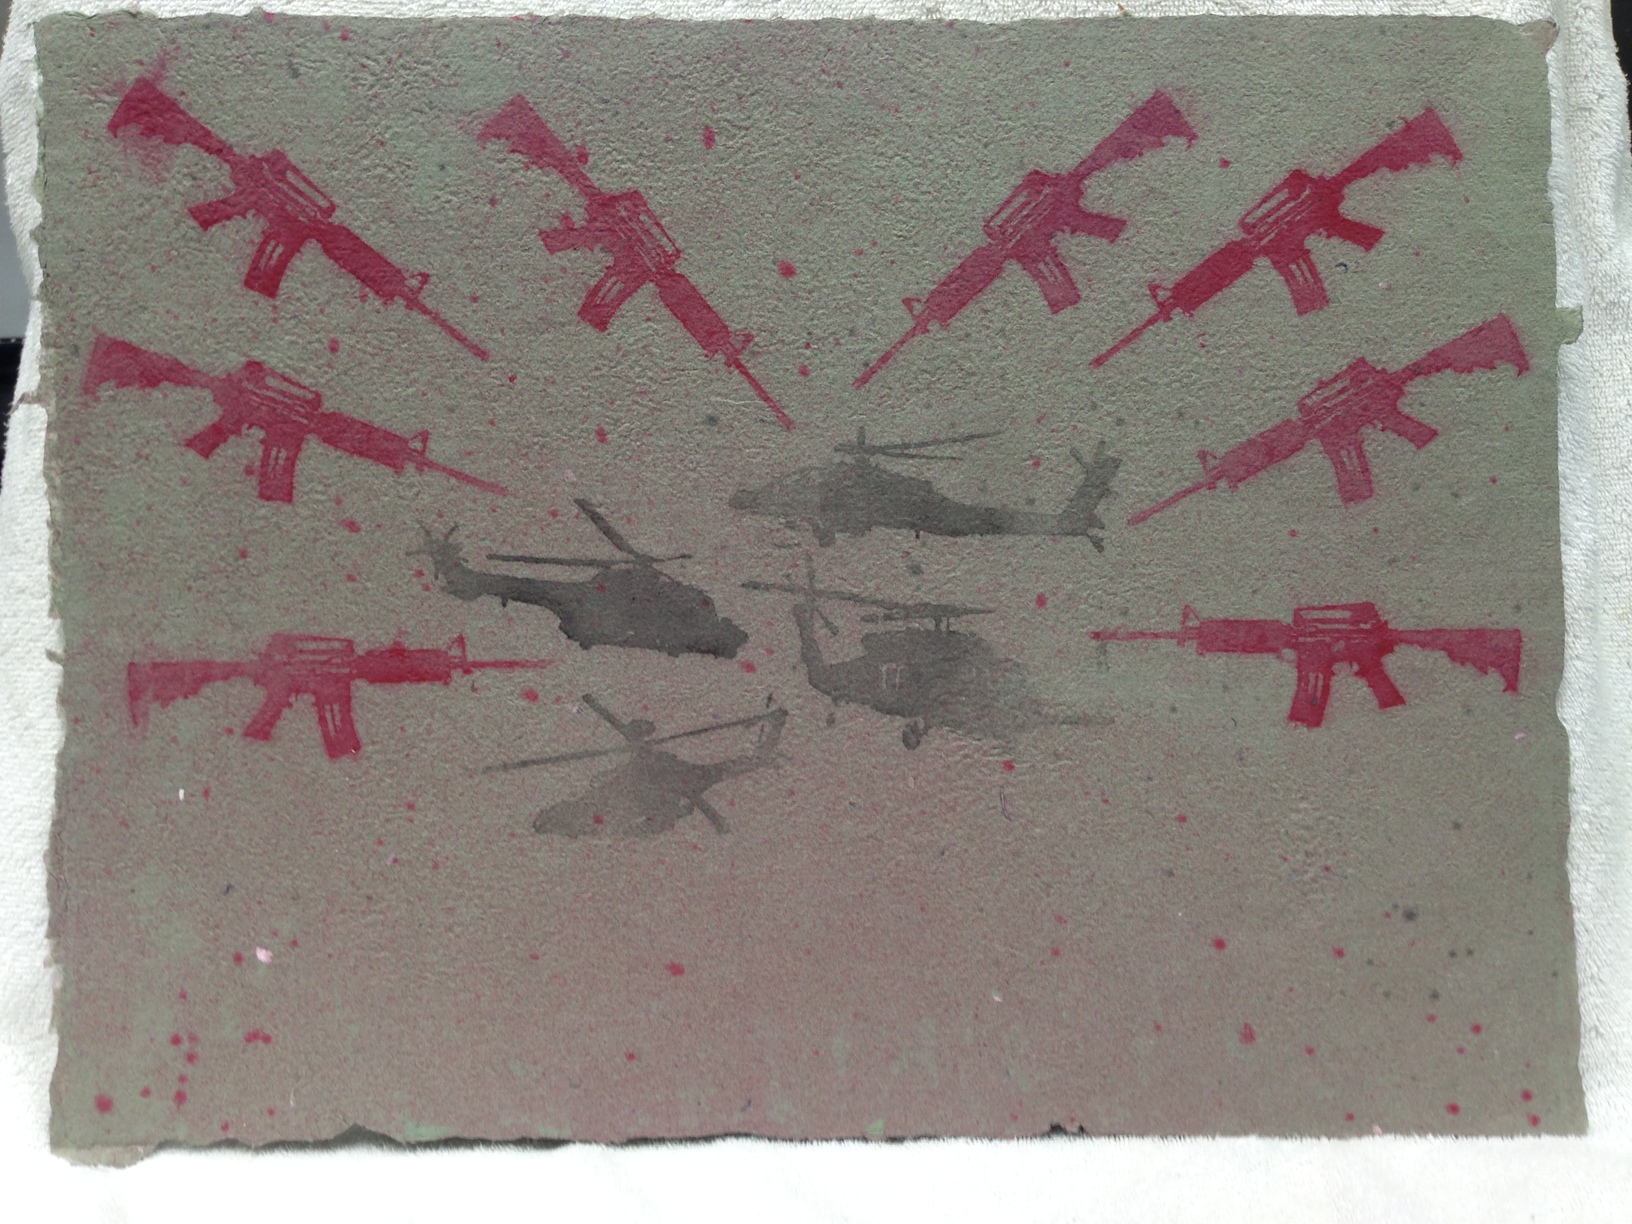 Sarah Mess Army - Somalia _Somalia_ 2013 Pulp Spray on Handmade Paper from military uniforms 15 x 20 IMG_1040JPG.jpg